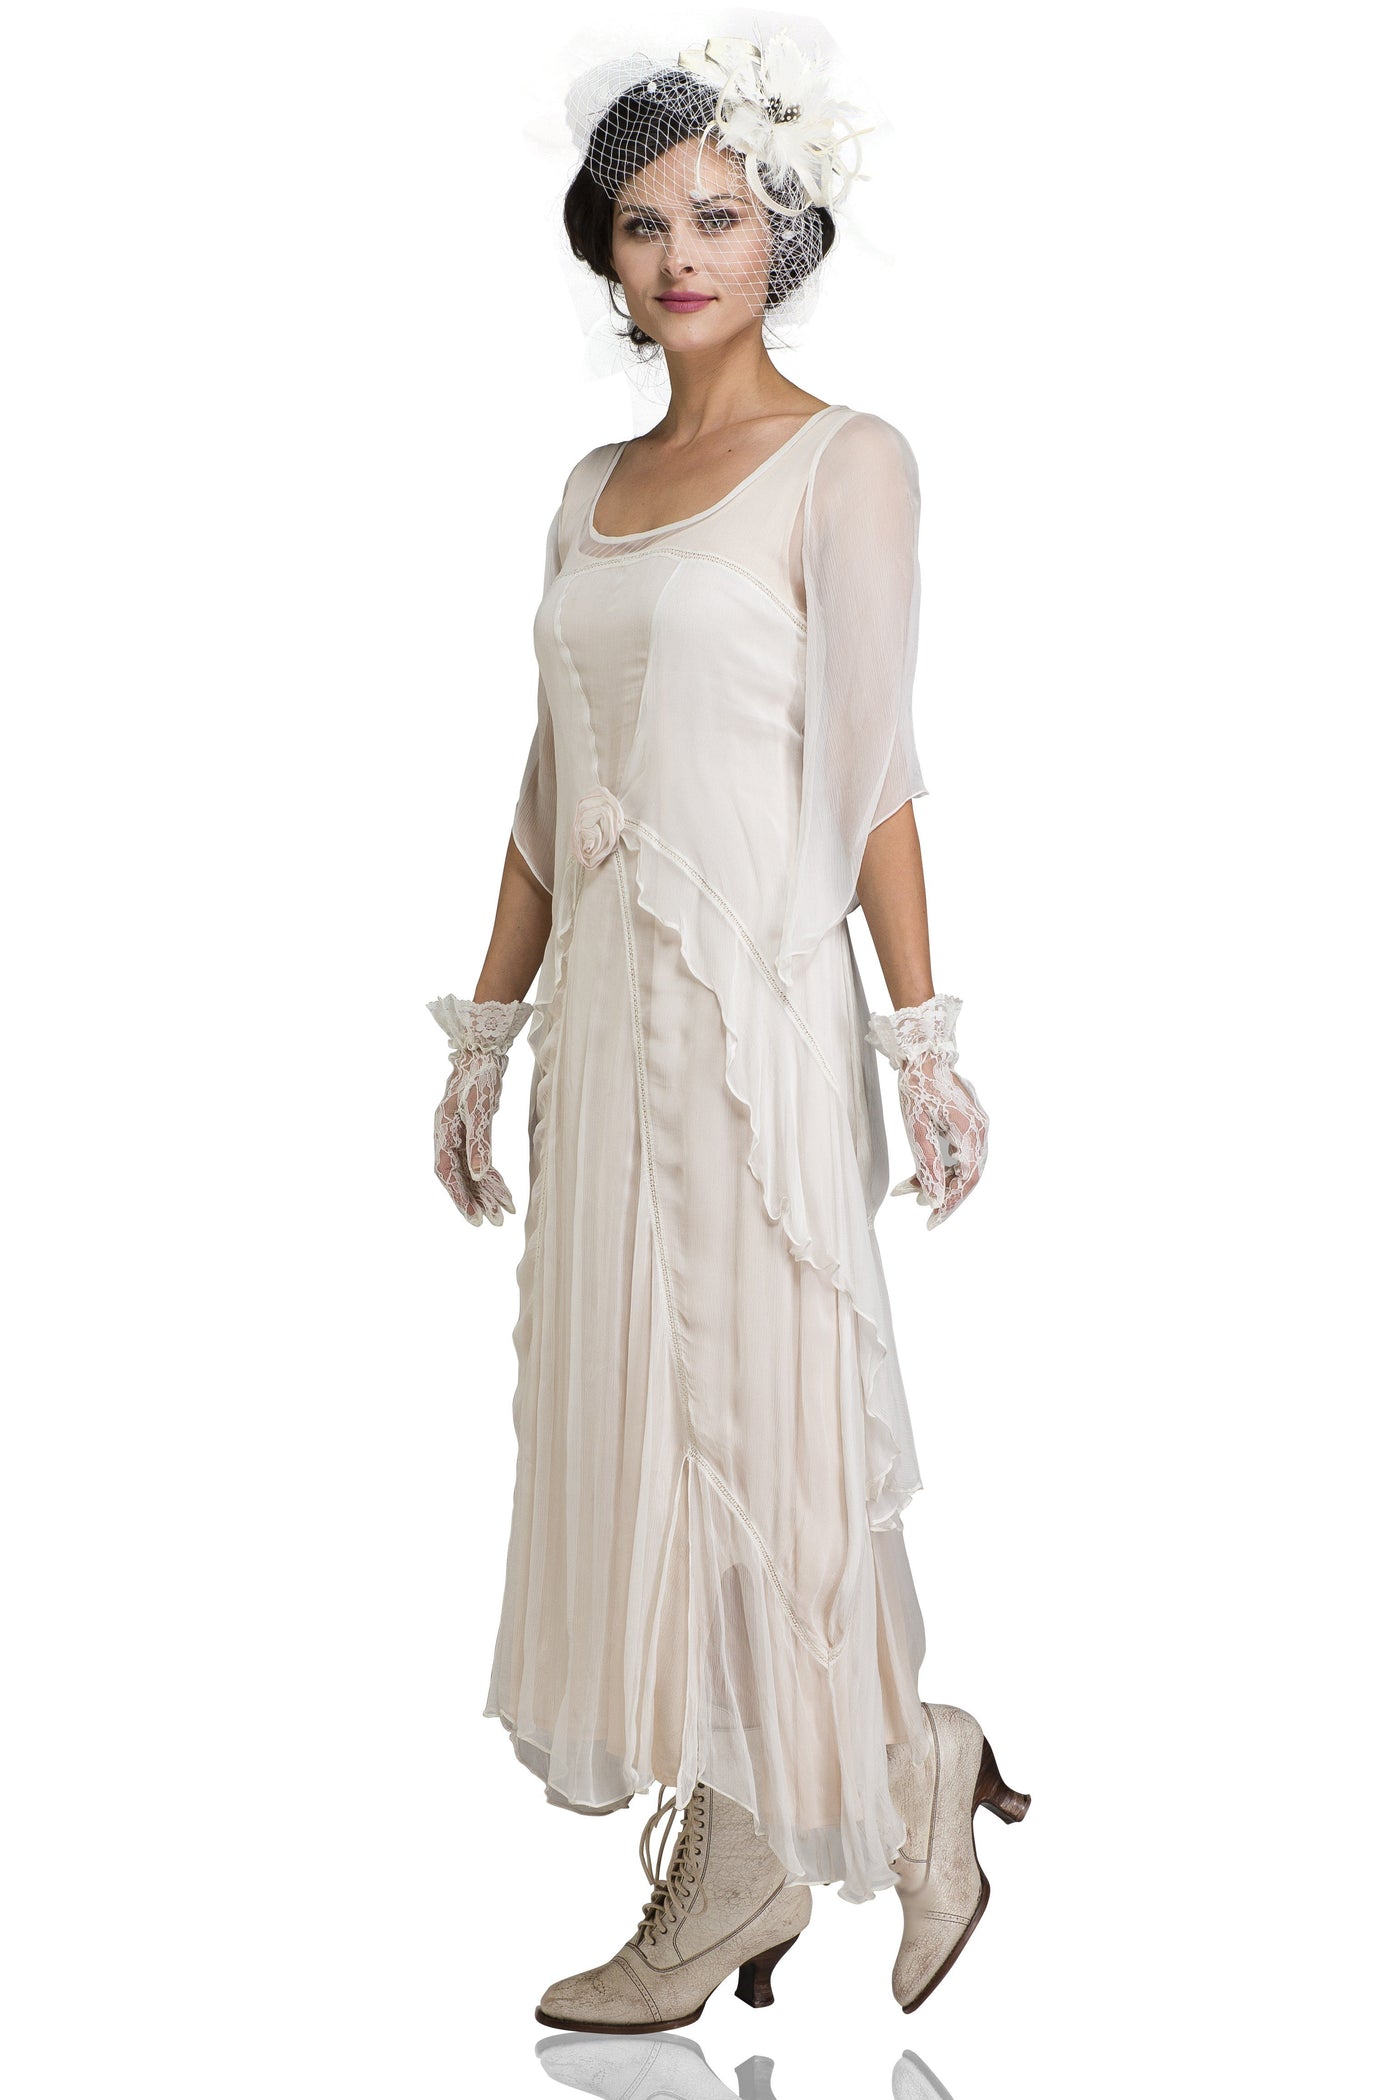 Great Gatsby Party Dress in Ivory by Nataya c